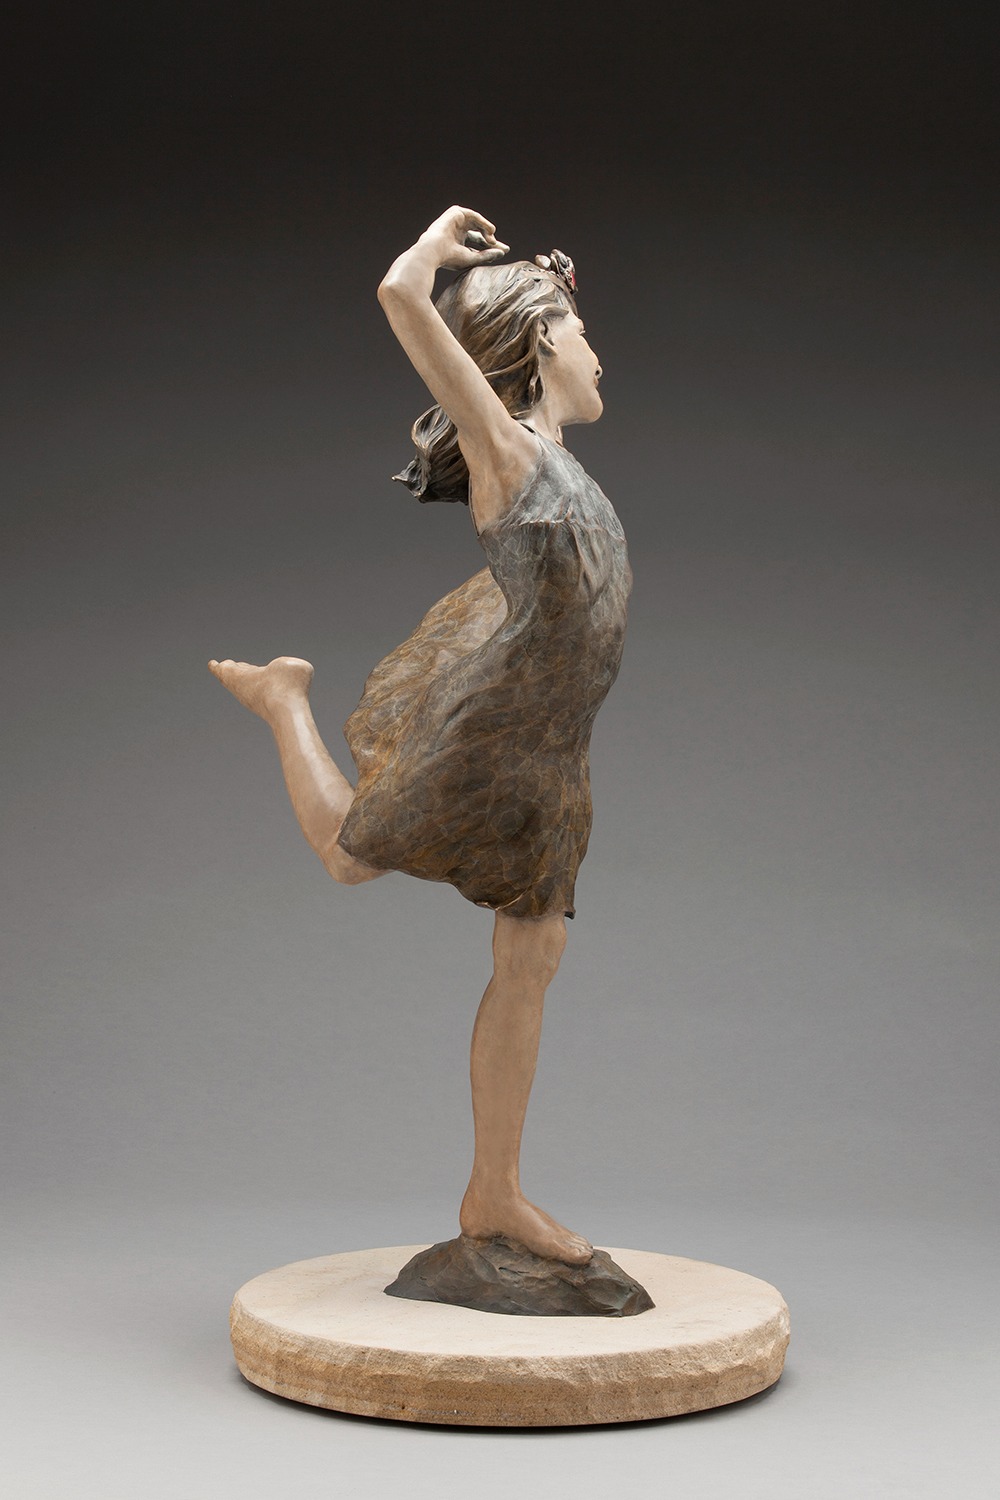 Poetic Figurative Bronze Sculptures By Angela Mia De La Vega (7)